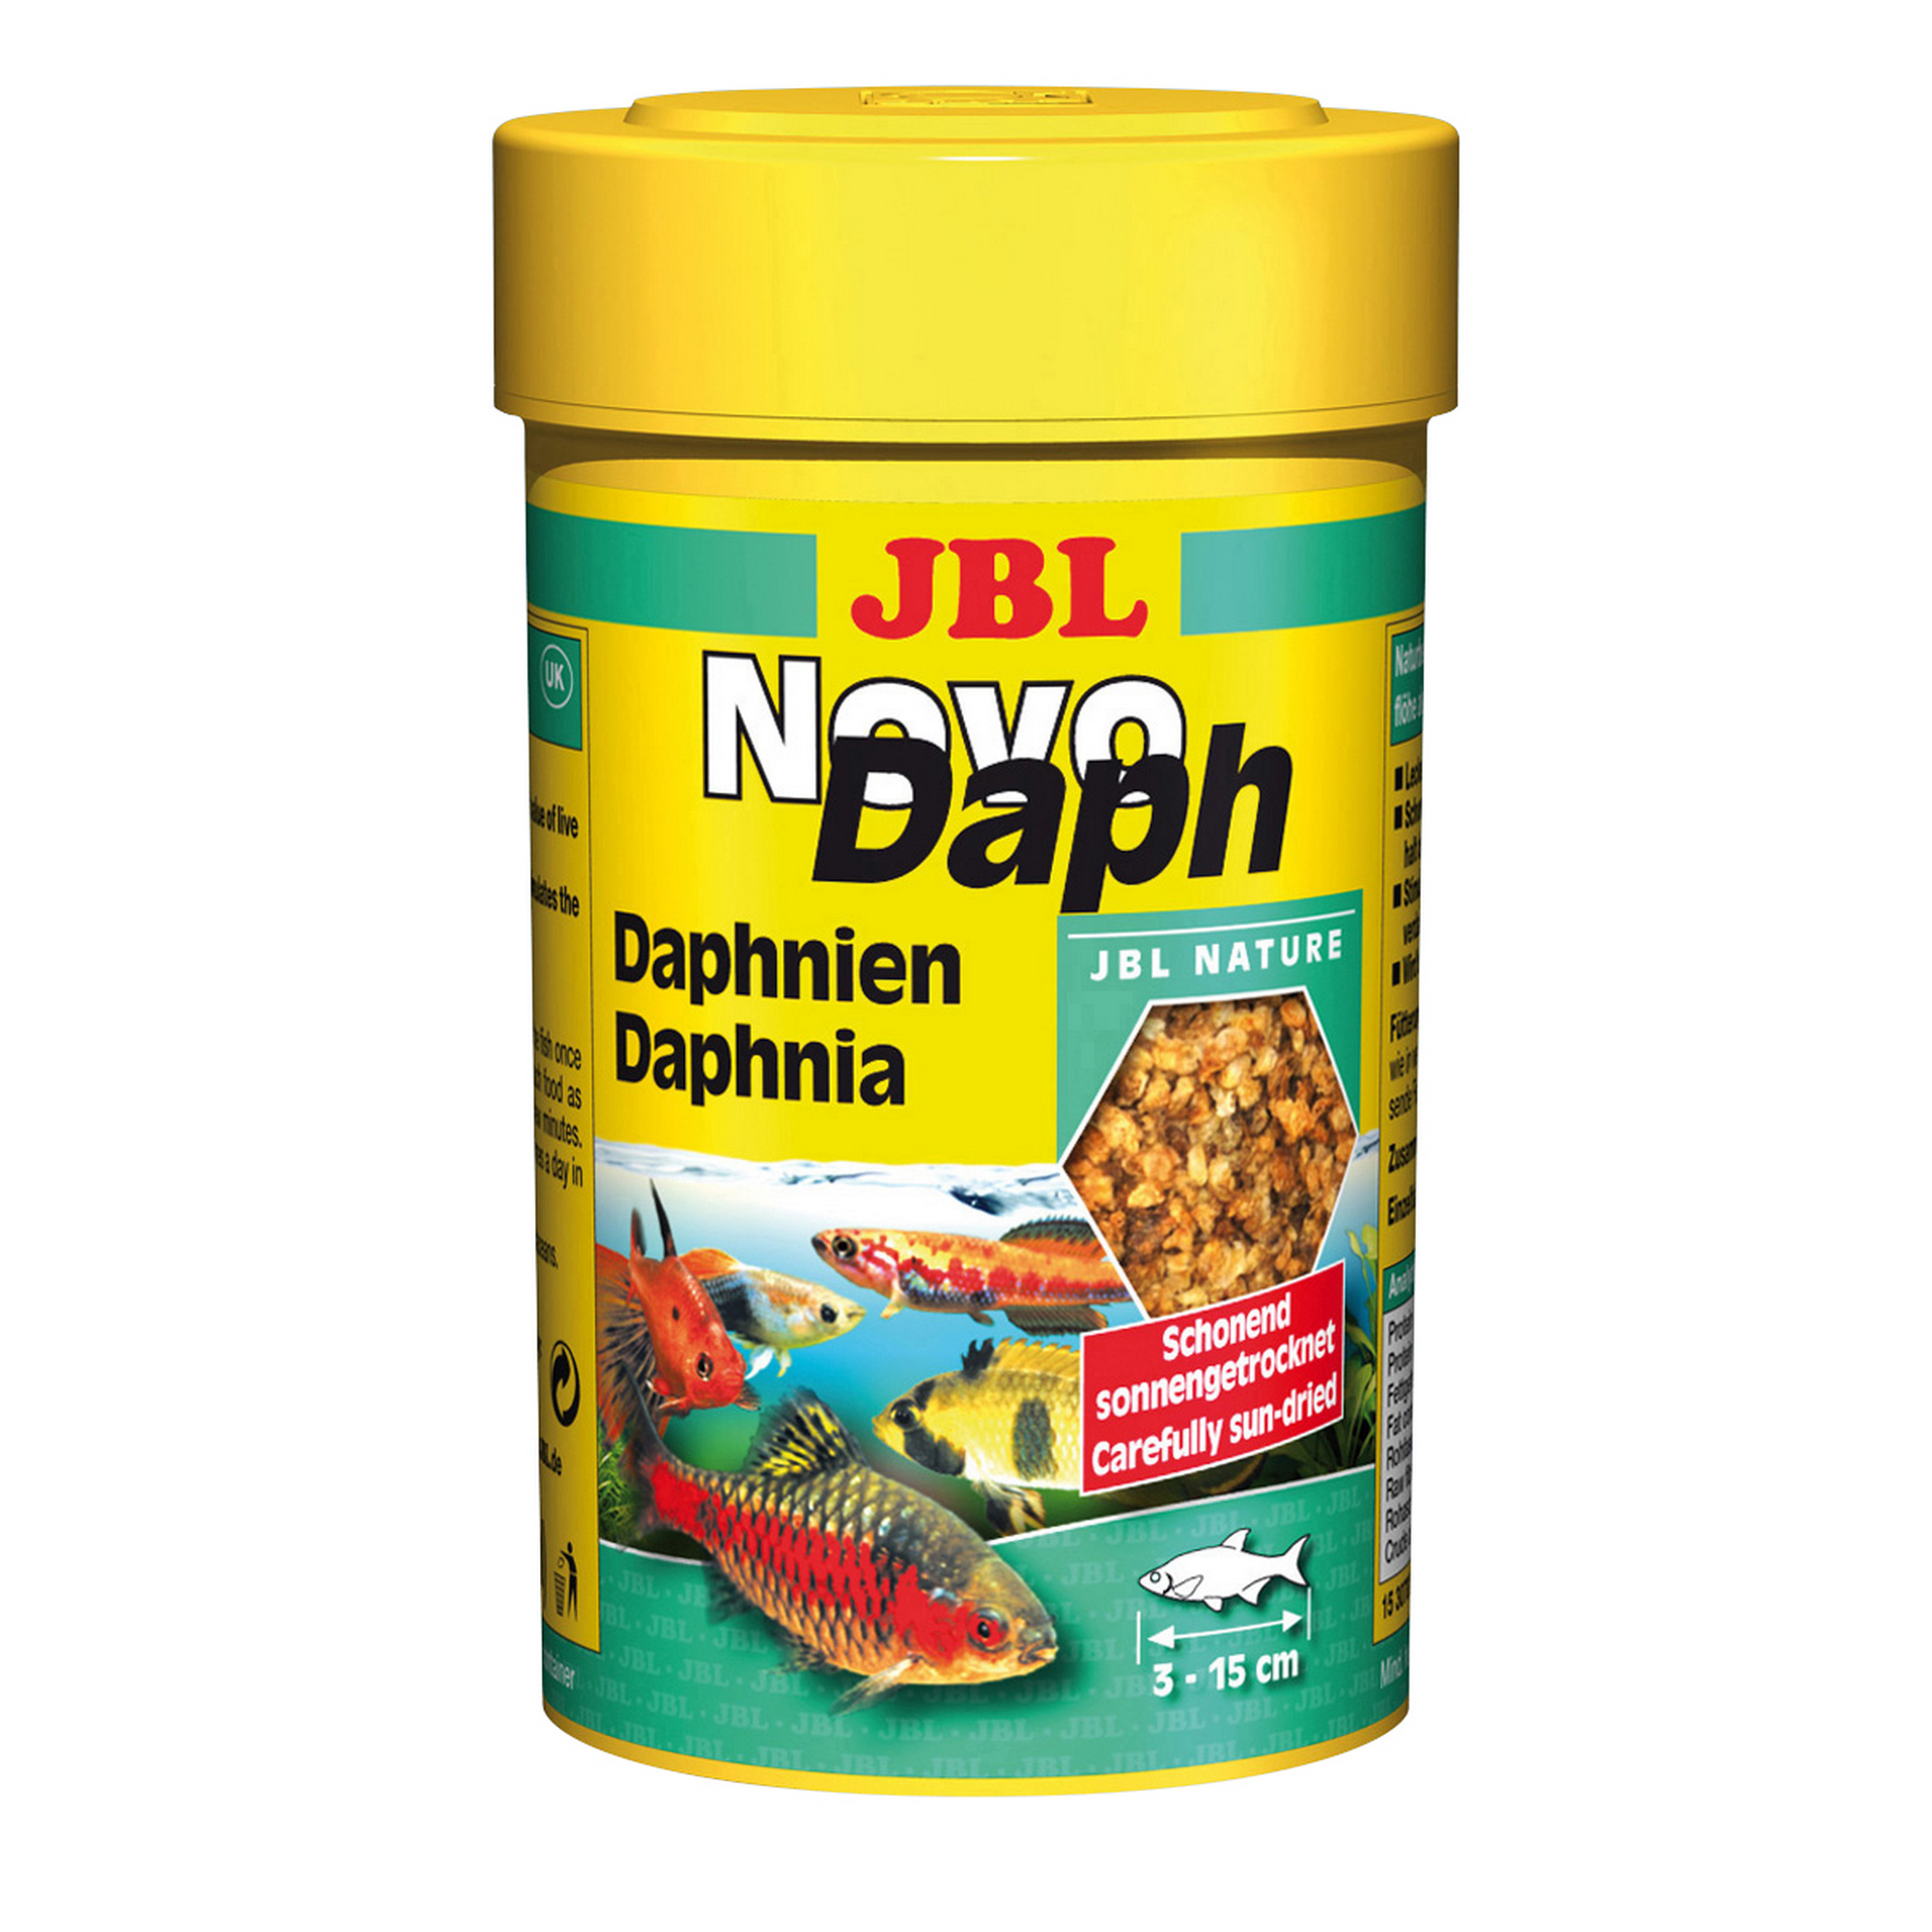 Novo Daph Daphnien 100 ml + product picture